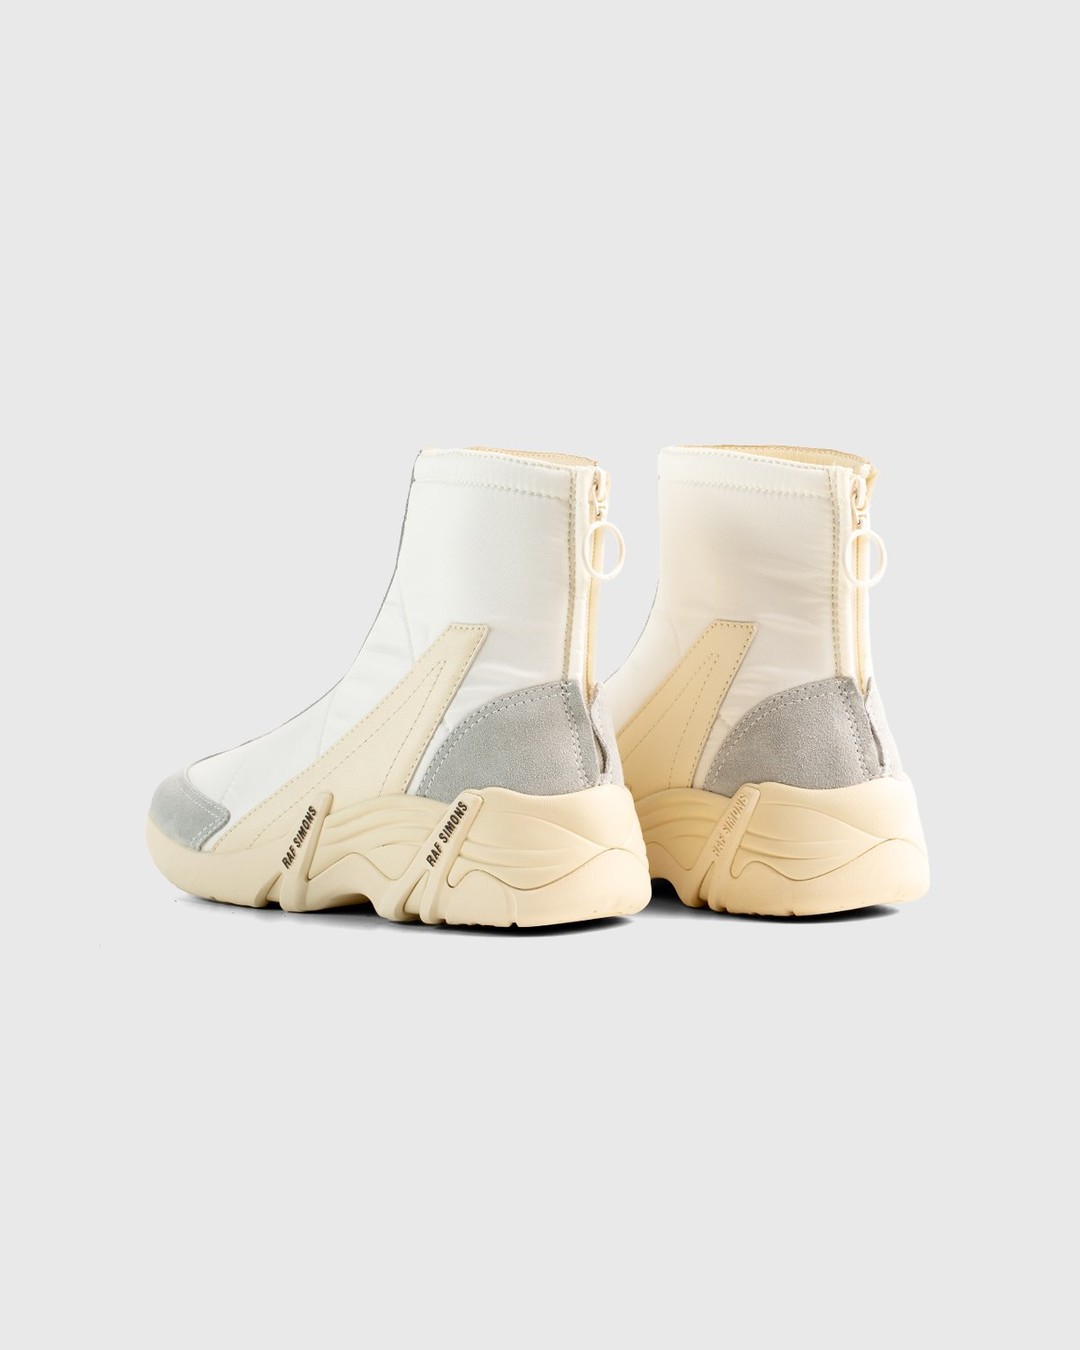 Raf Simons – Cylon 22 Cream - High Top Sneakers - Beige - Image 3